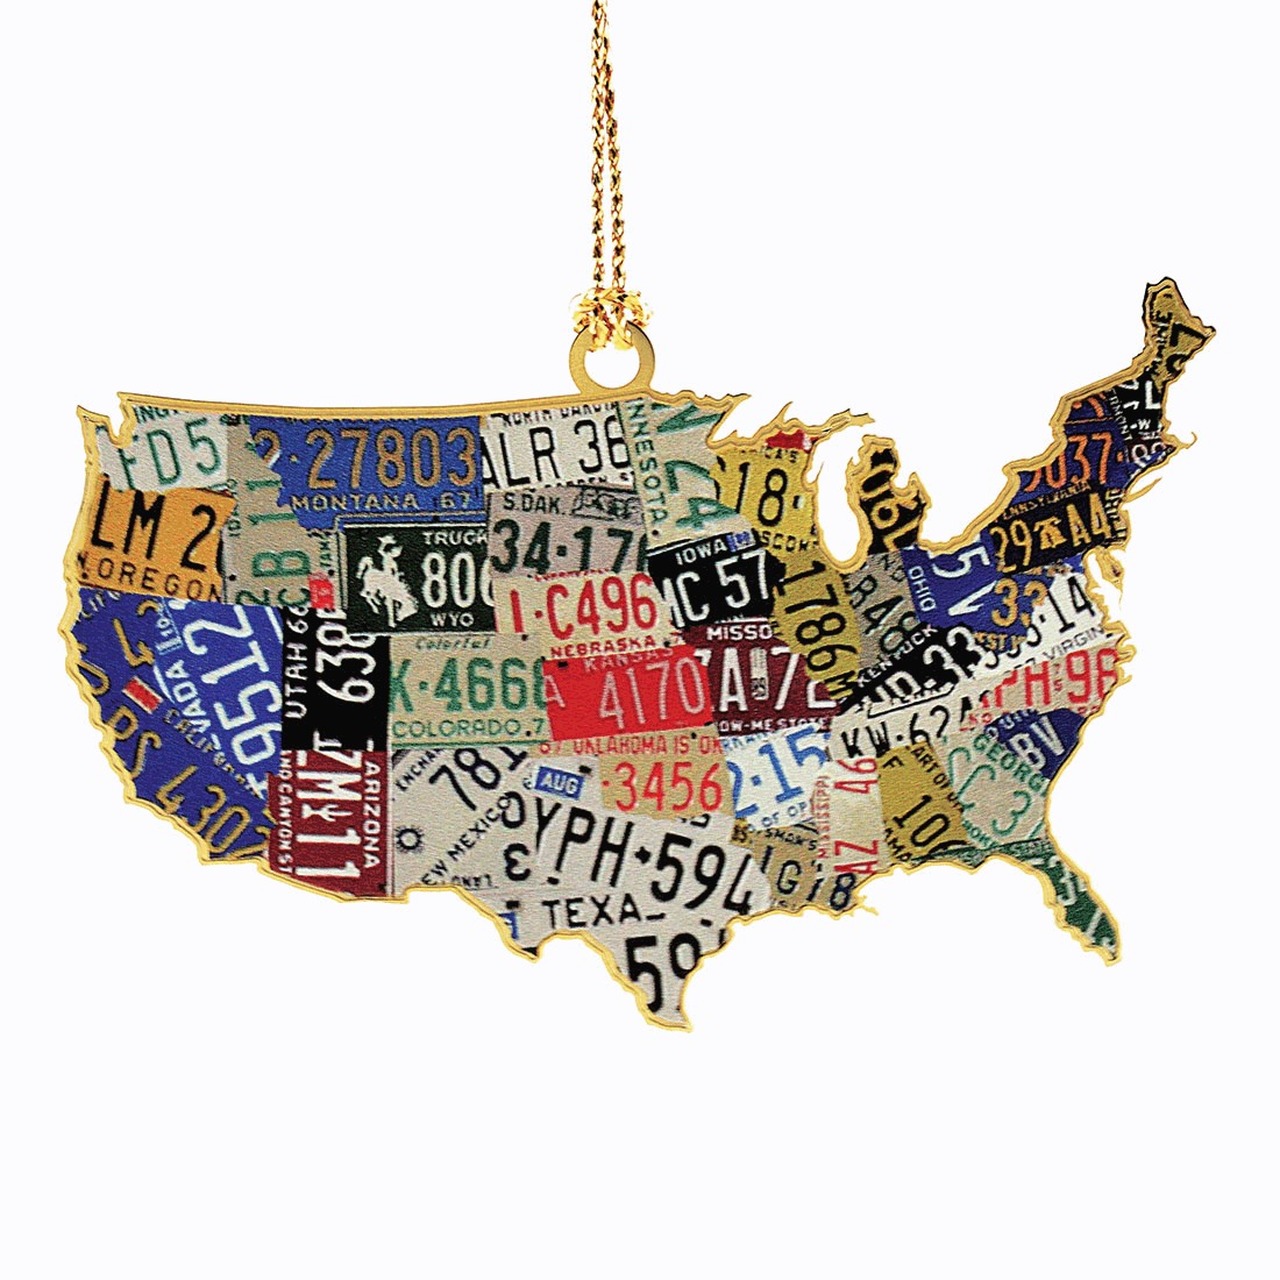 USA License Plate Map Ornament